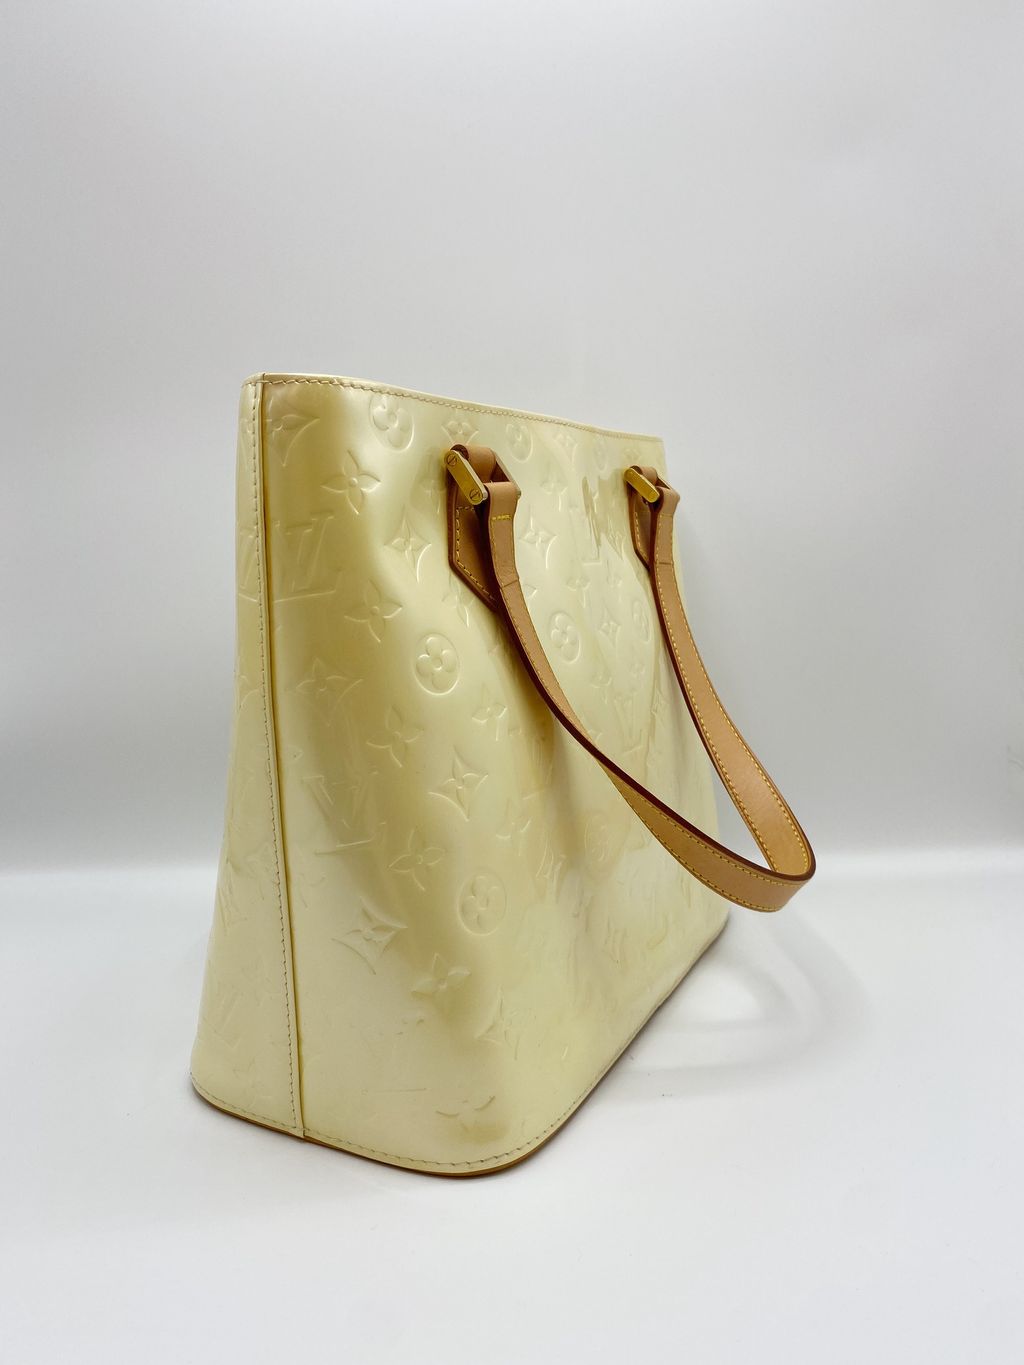 Louis Vuitton Houston Handbag 329994